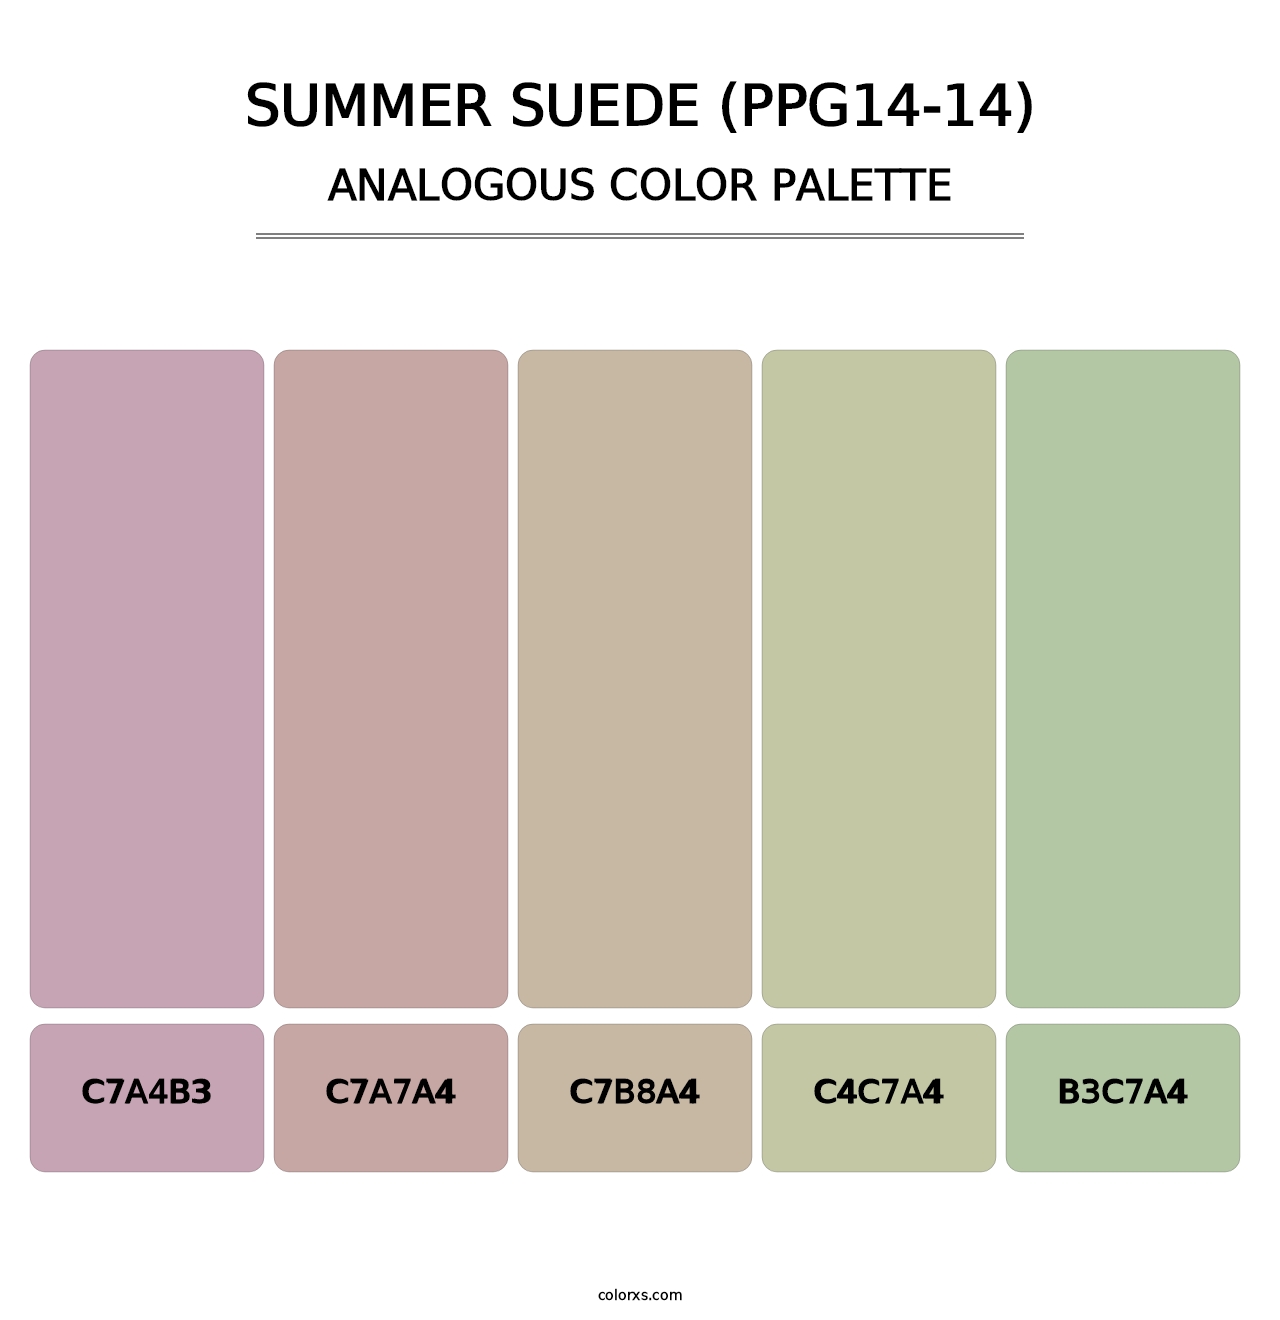 Summer Suede (PPG14-14) - Analogous Color Palette